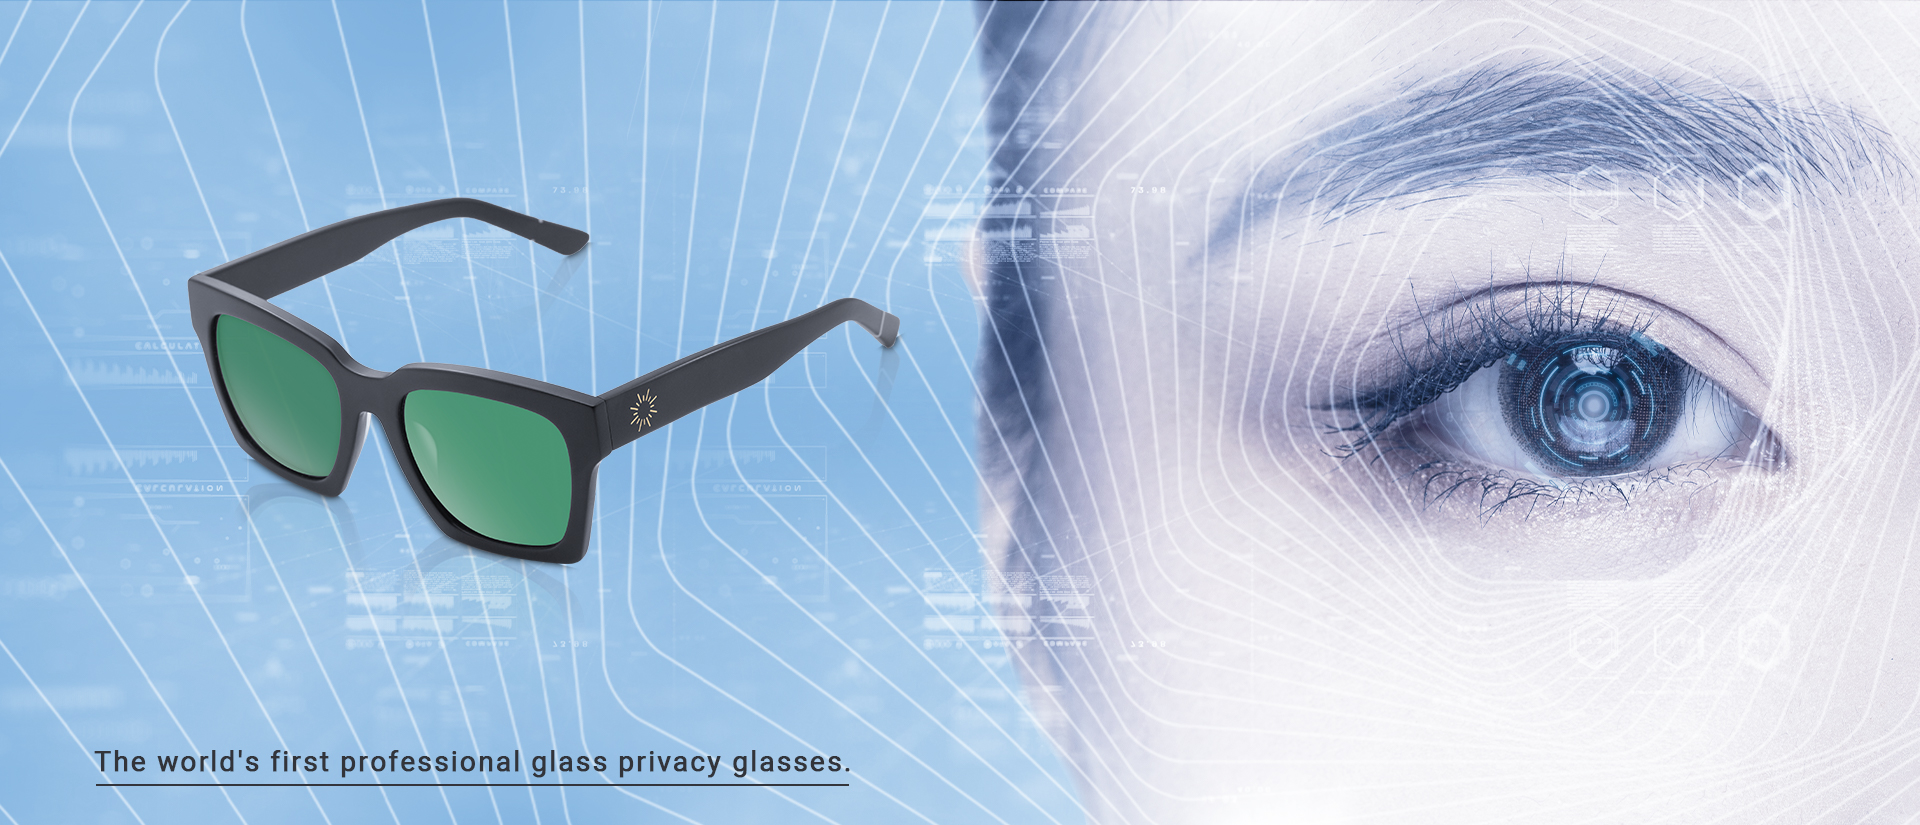 privacy glasses manufacturer